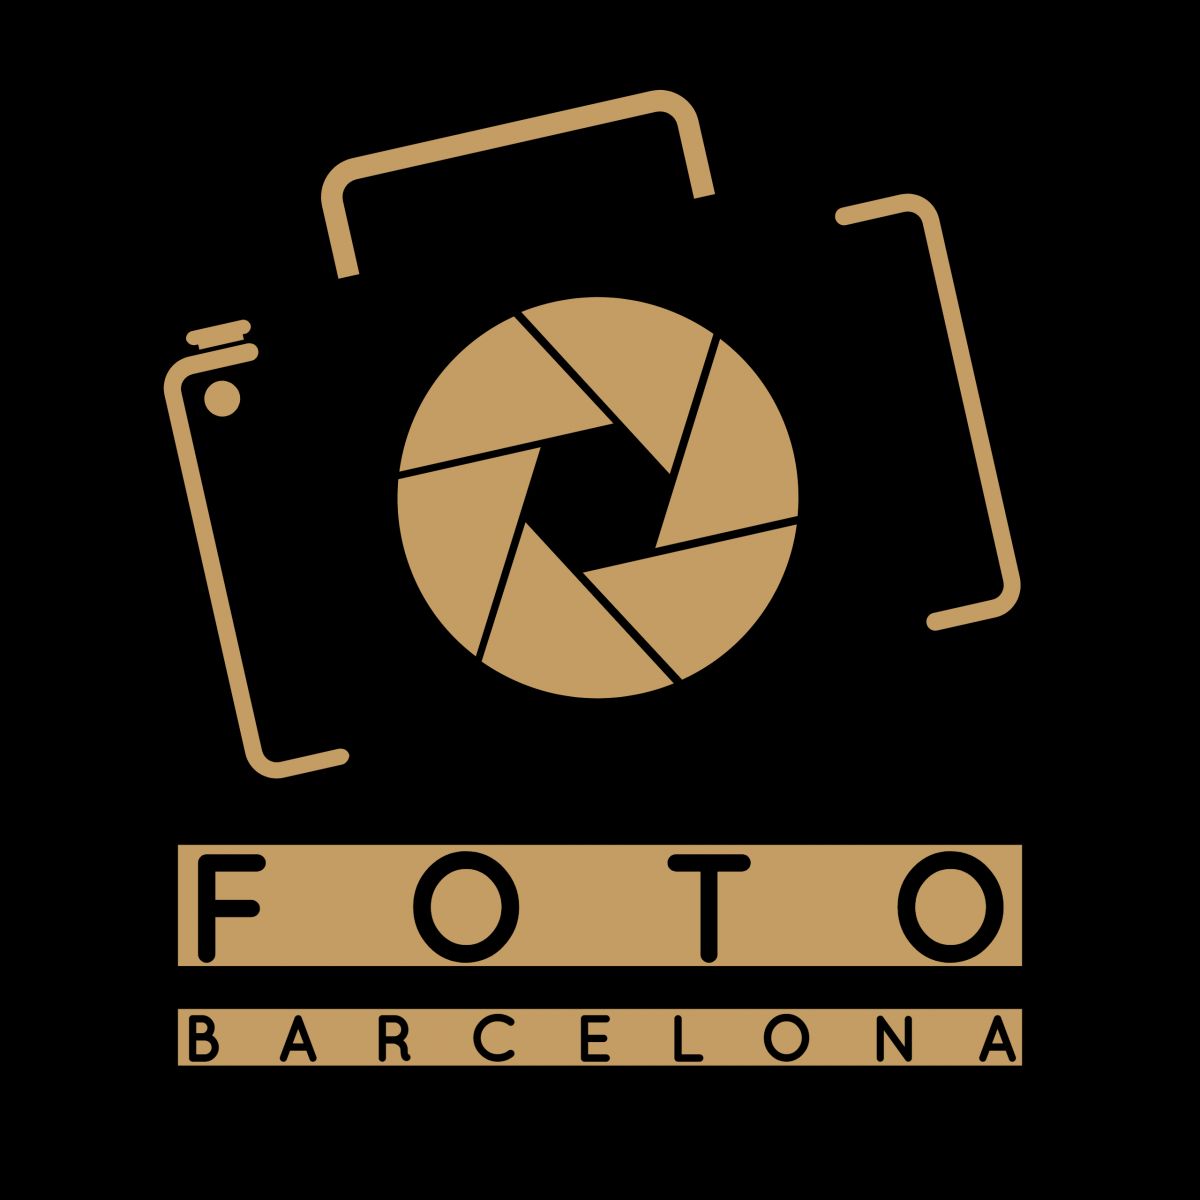 Foto Barcelona - Badalona - Fotografía de boudoir